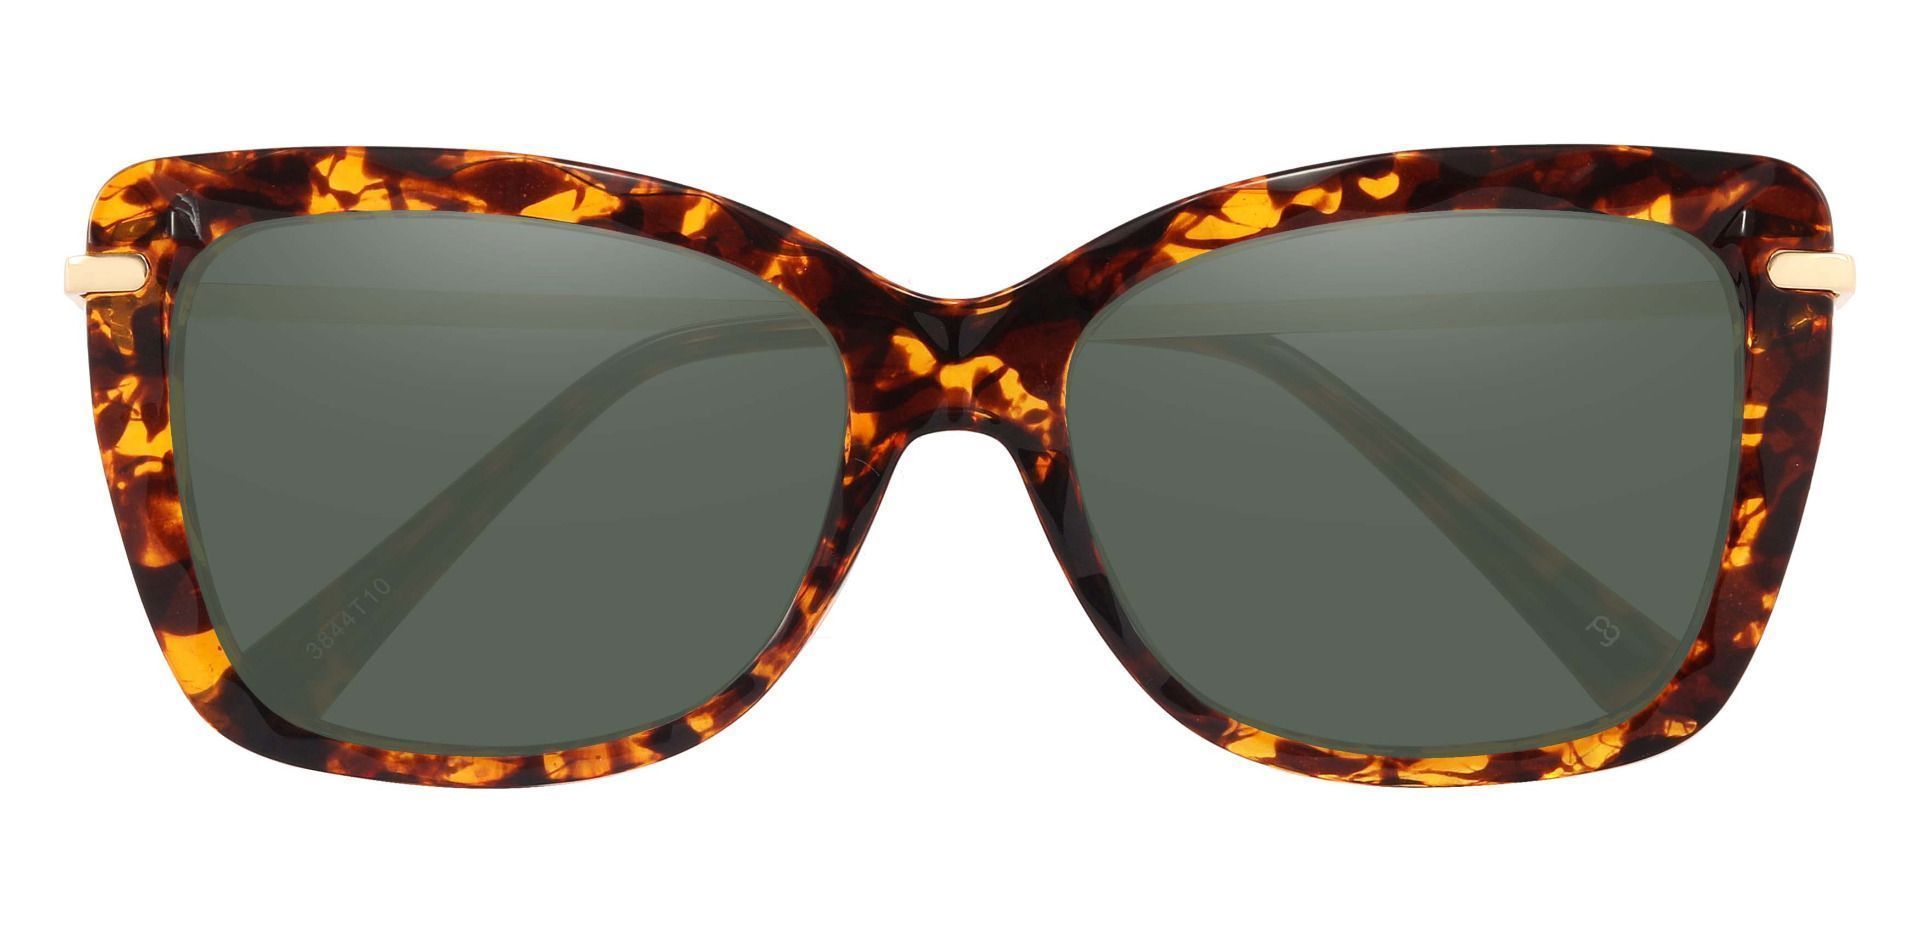 Shoshanna Rectangle Non-Rx Sunglasses - Tortoise Frame With Green Lenses